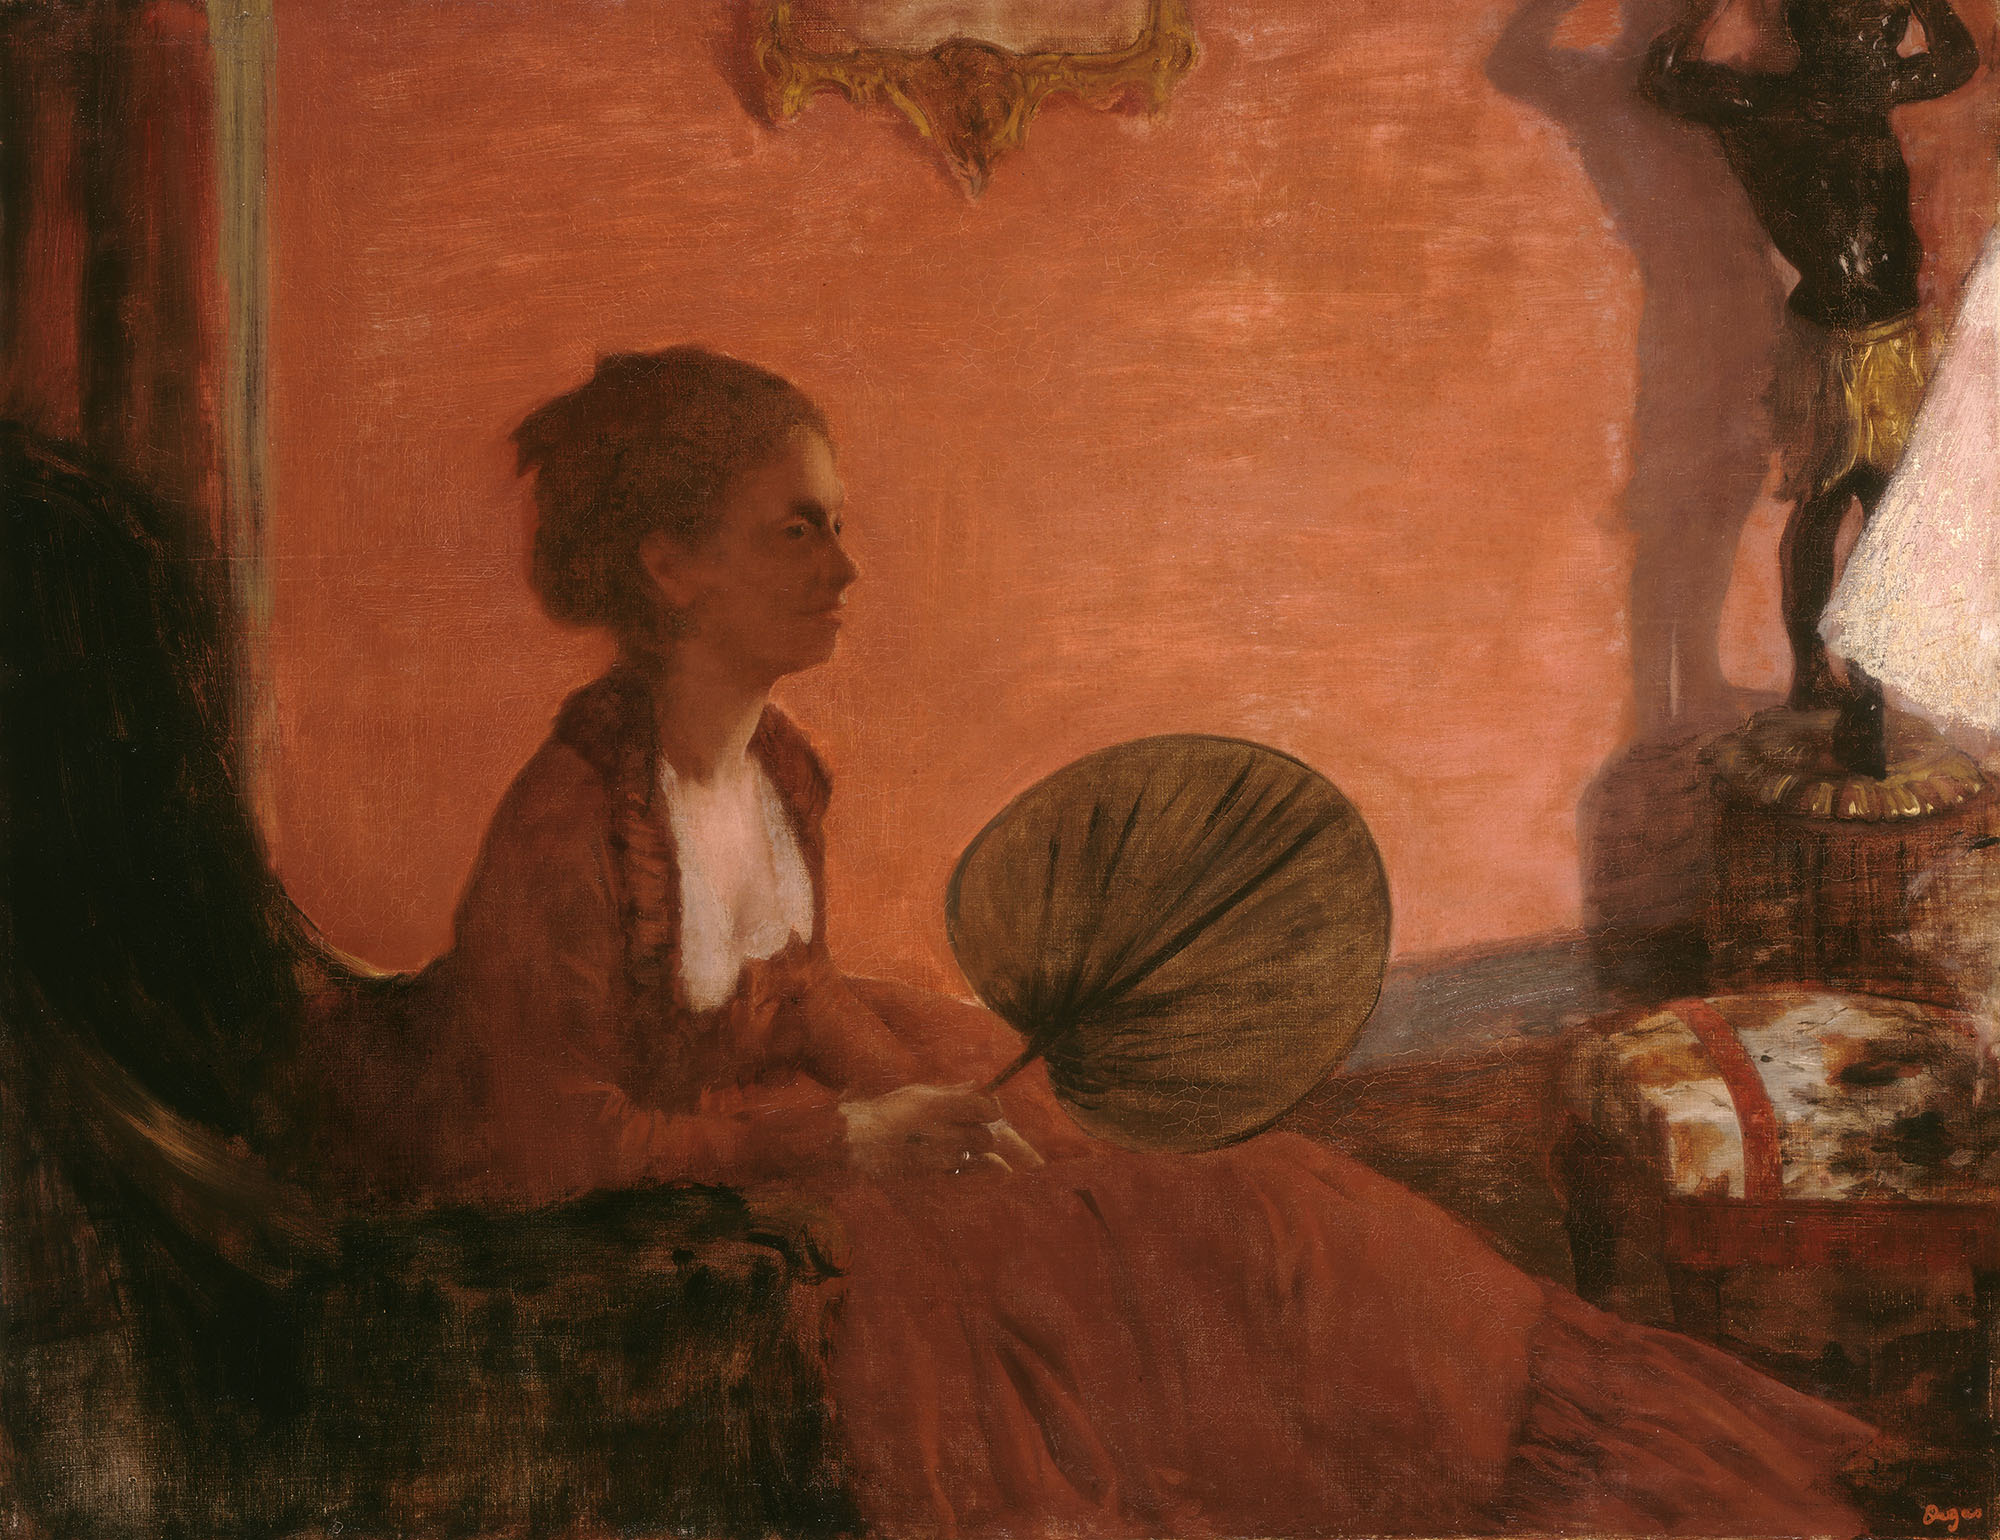 Эдгар Дега. "Мадам Камю". 1869-1870.